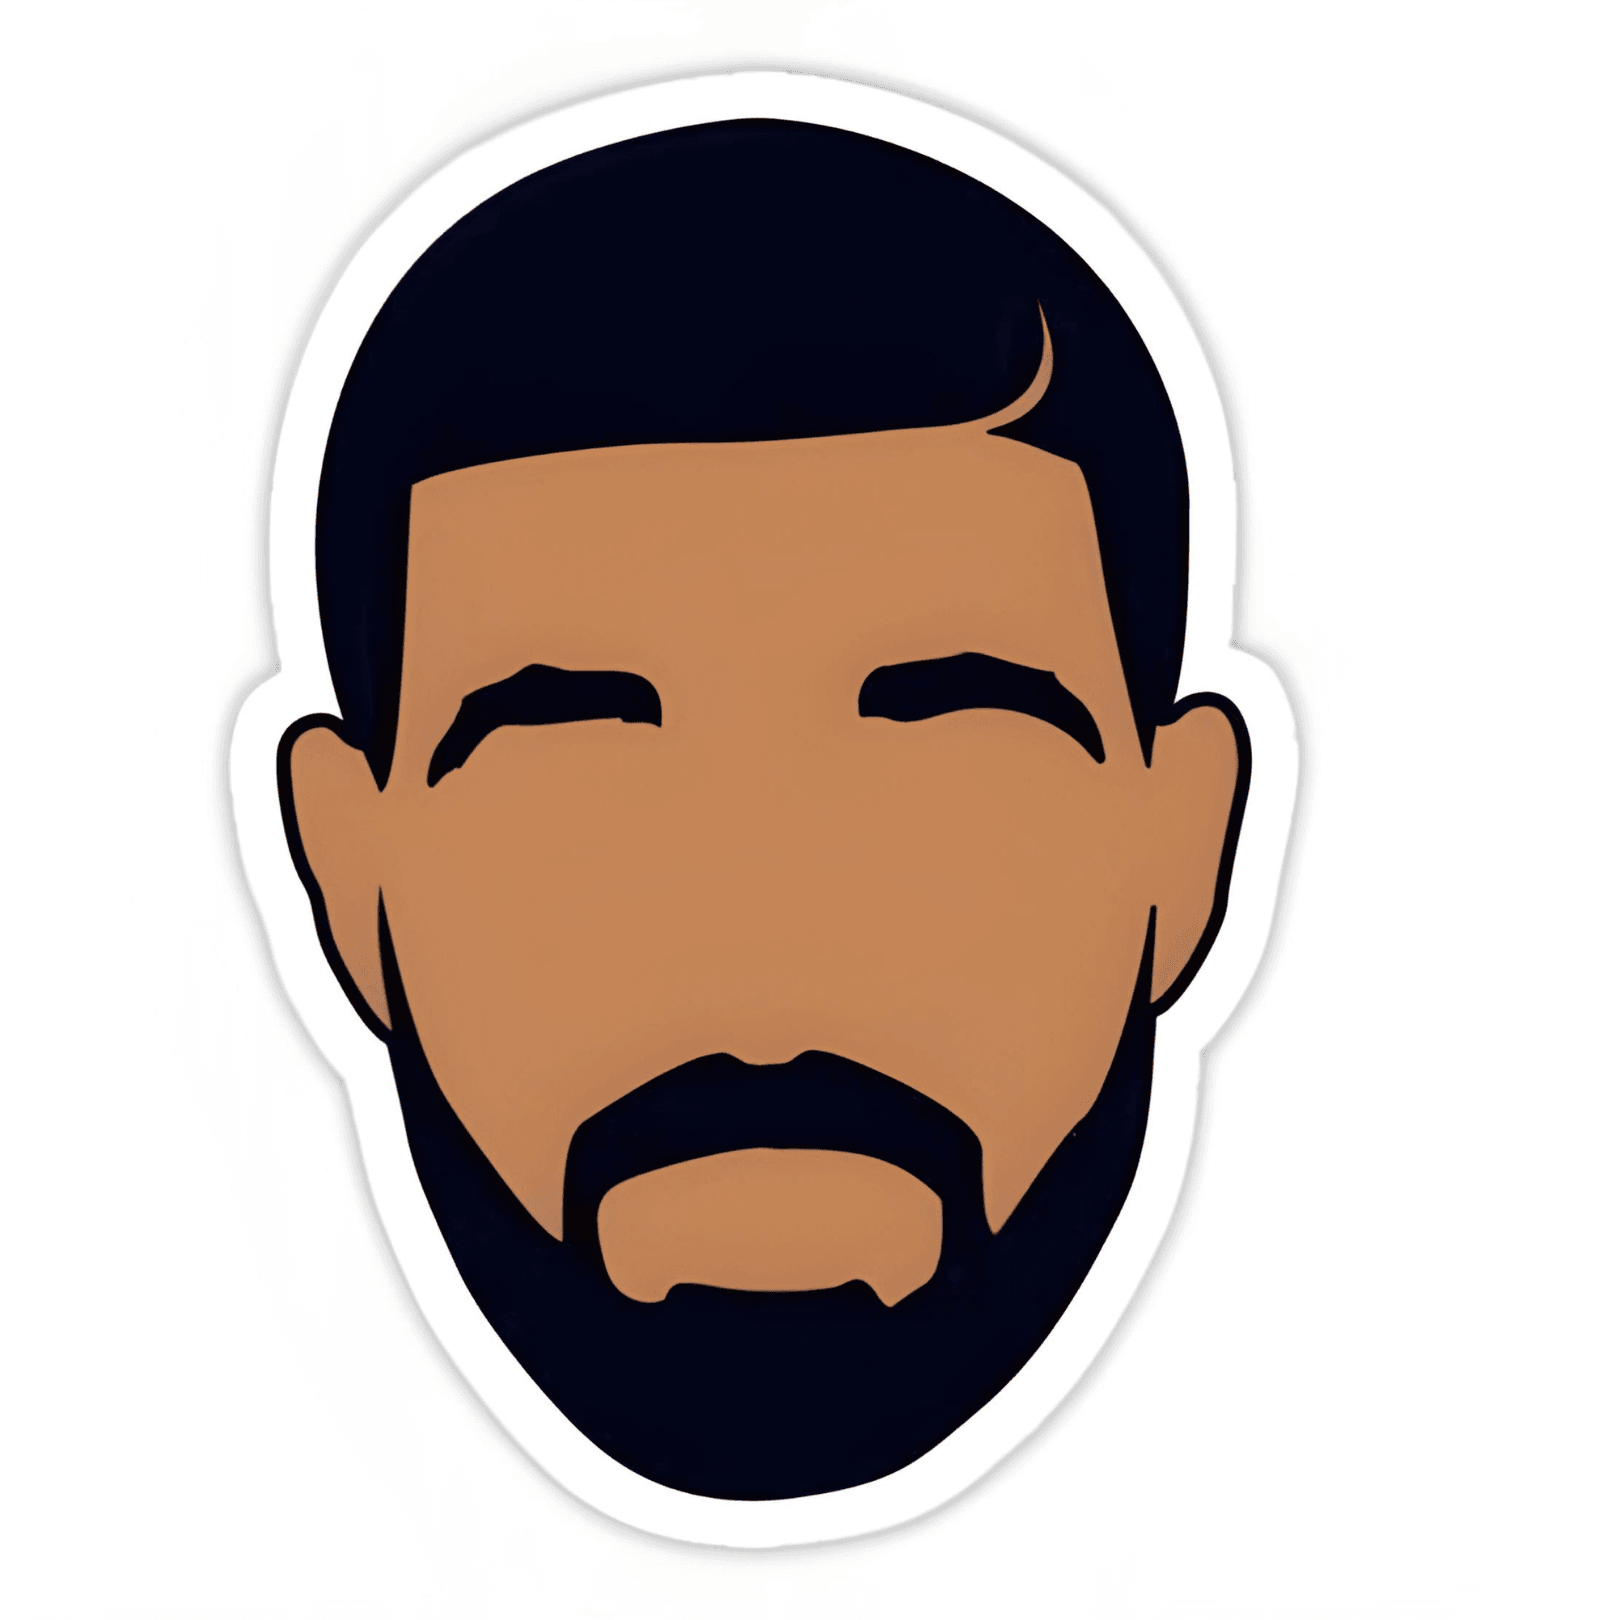 Drake sticker 6cm